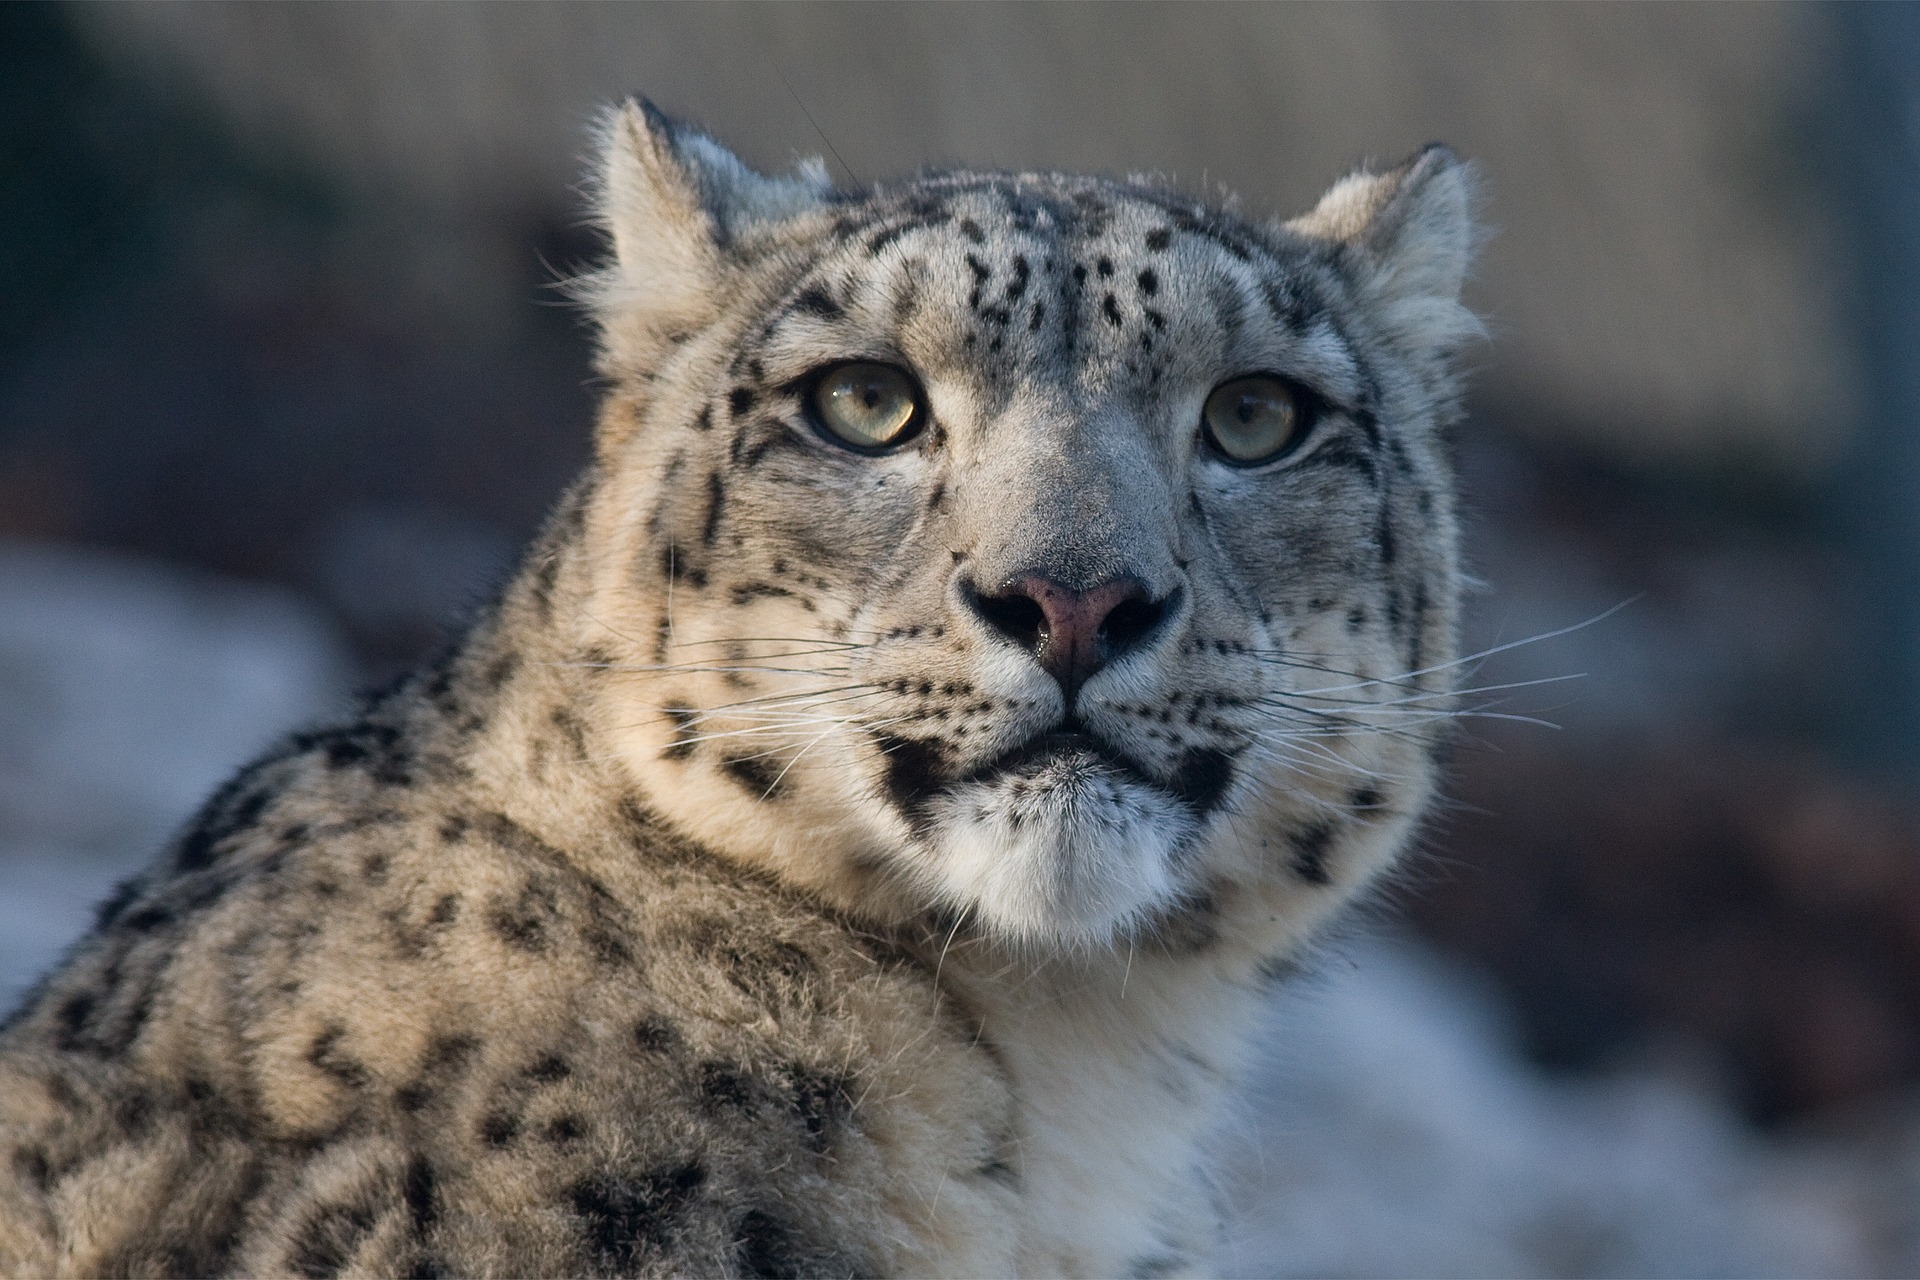 Snow leopard. Photo by 942784 on PIxabay